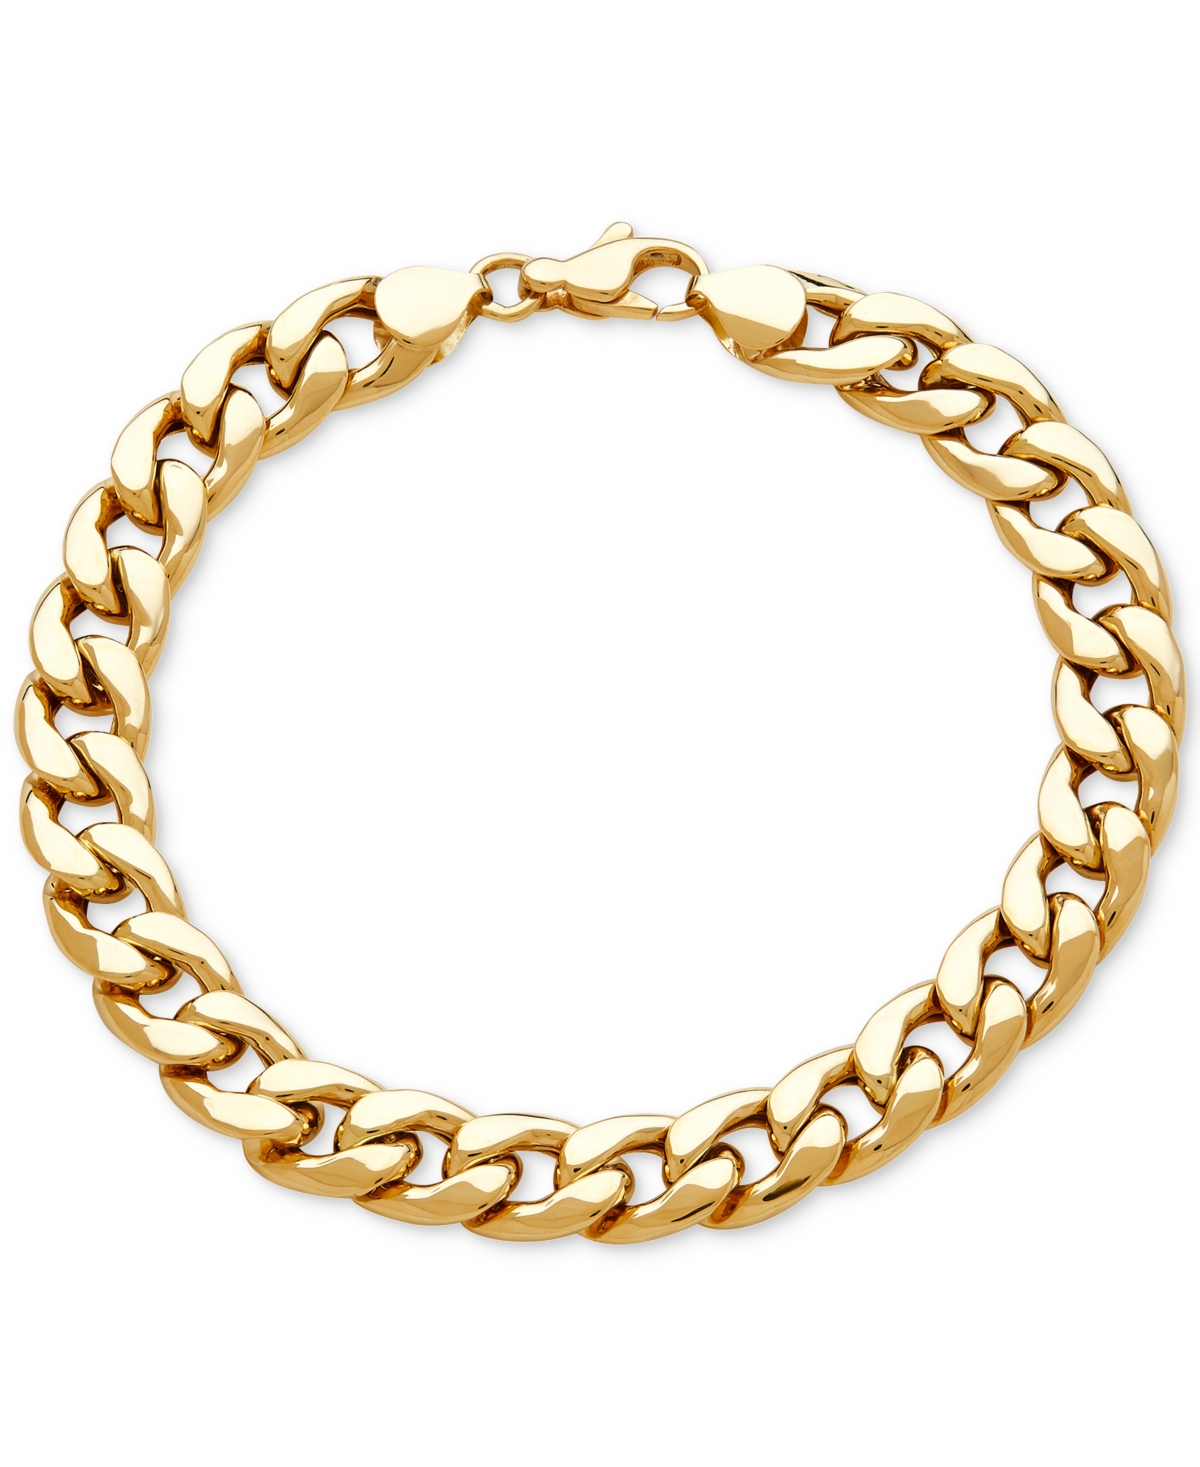 Men's Curb Link Bracelet (11.8mm) in 10k Gold - Yellow Gold